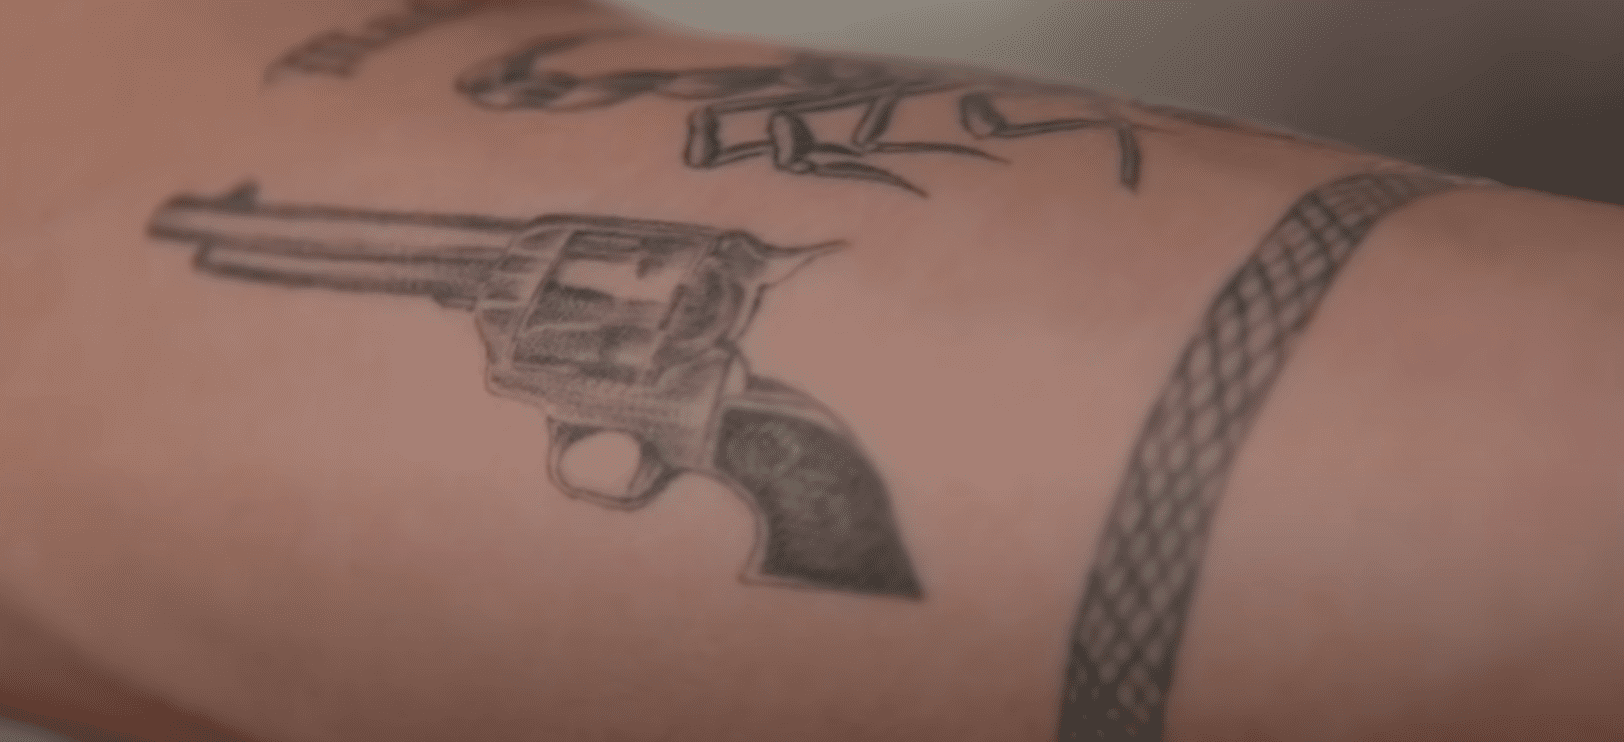 Vinnie Hacker's gun tattoo | Source: YouTube/ Inked